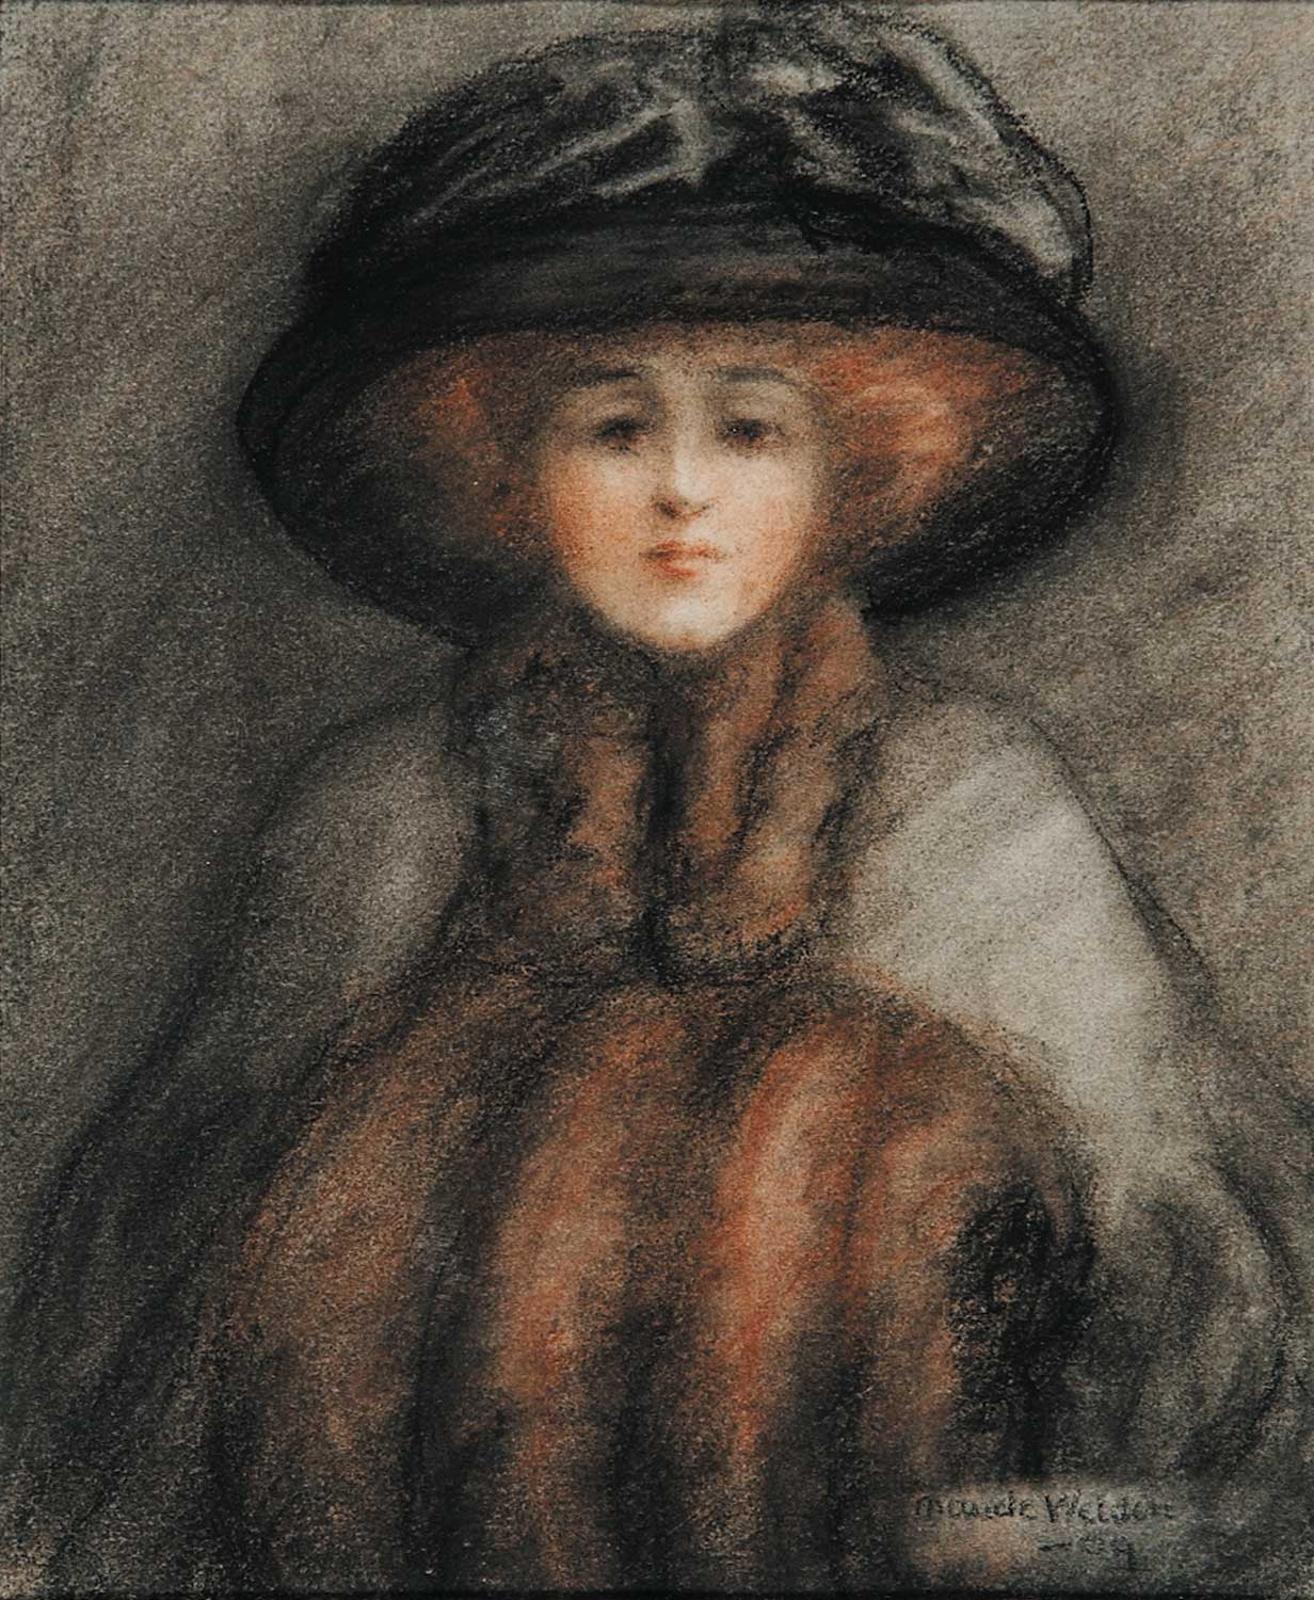 Maude Welden - Untitled - Lady in a Black Hat